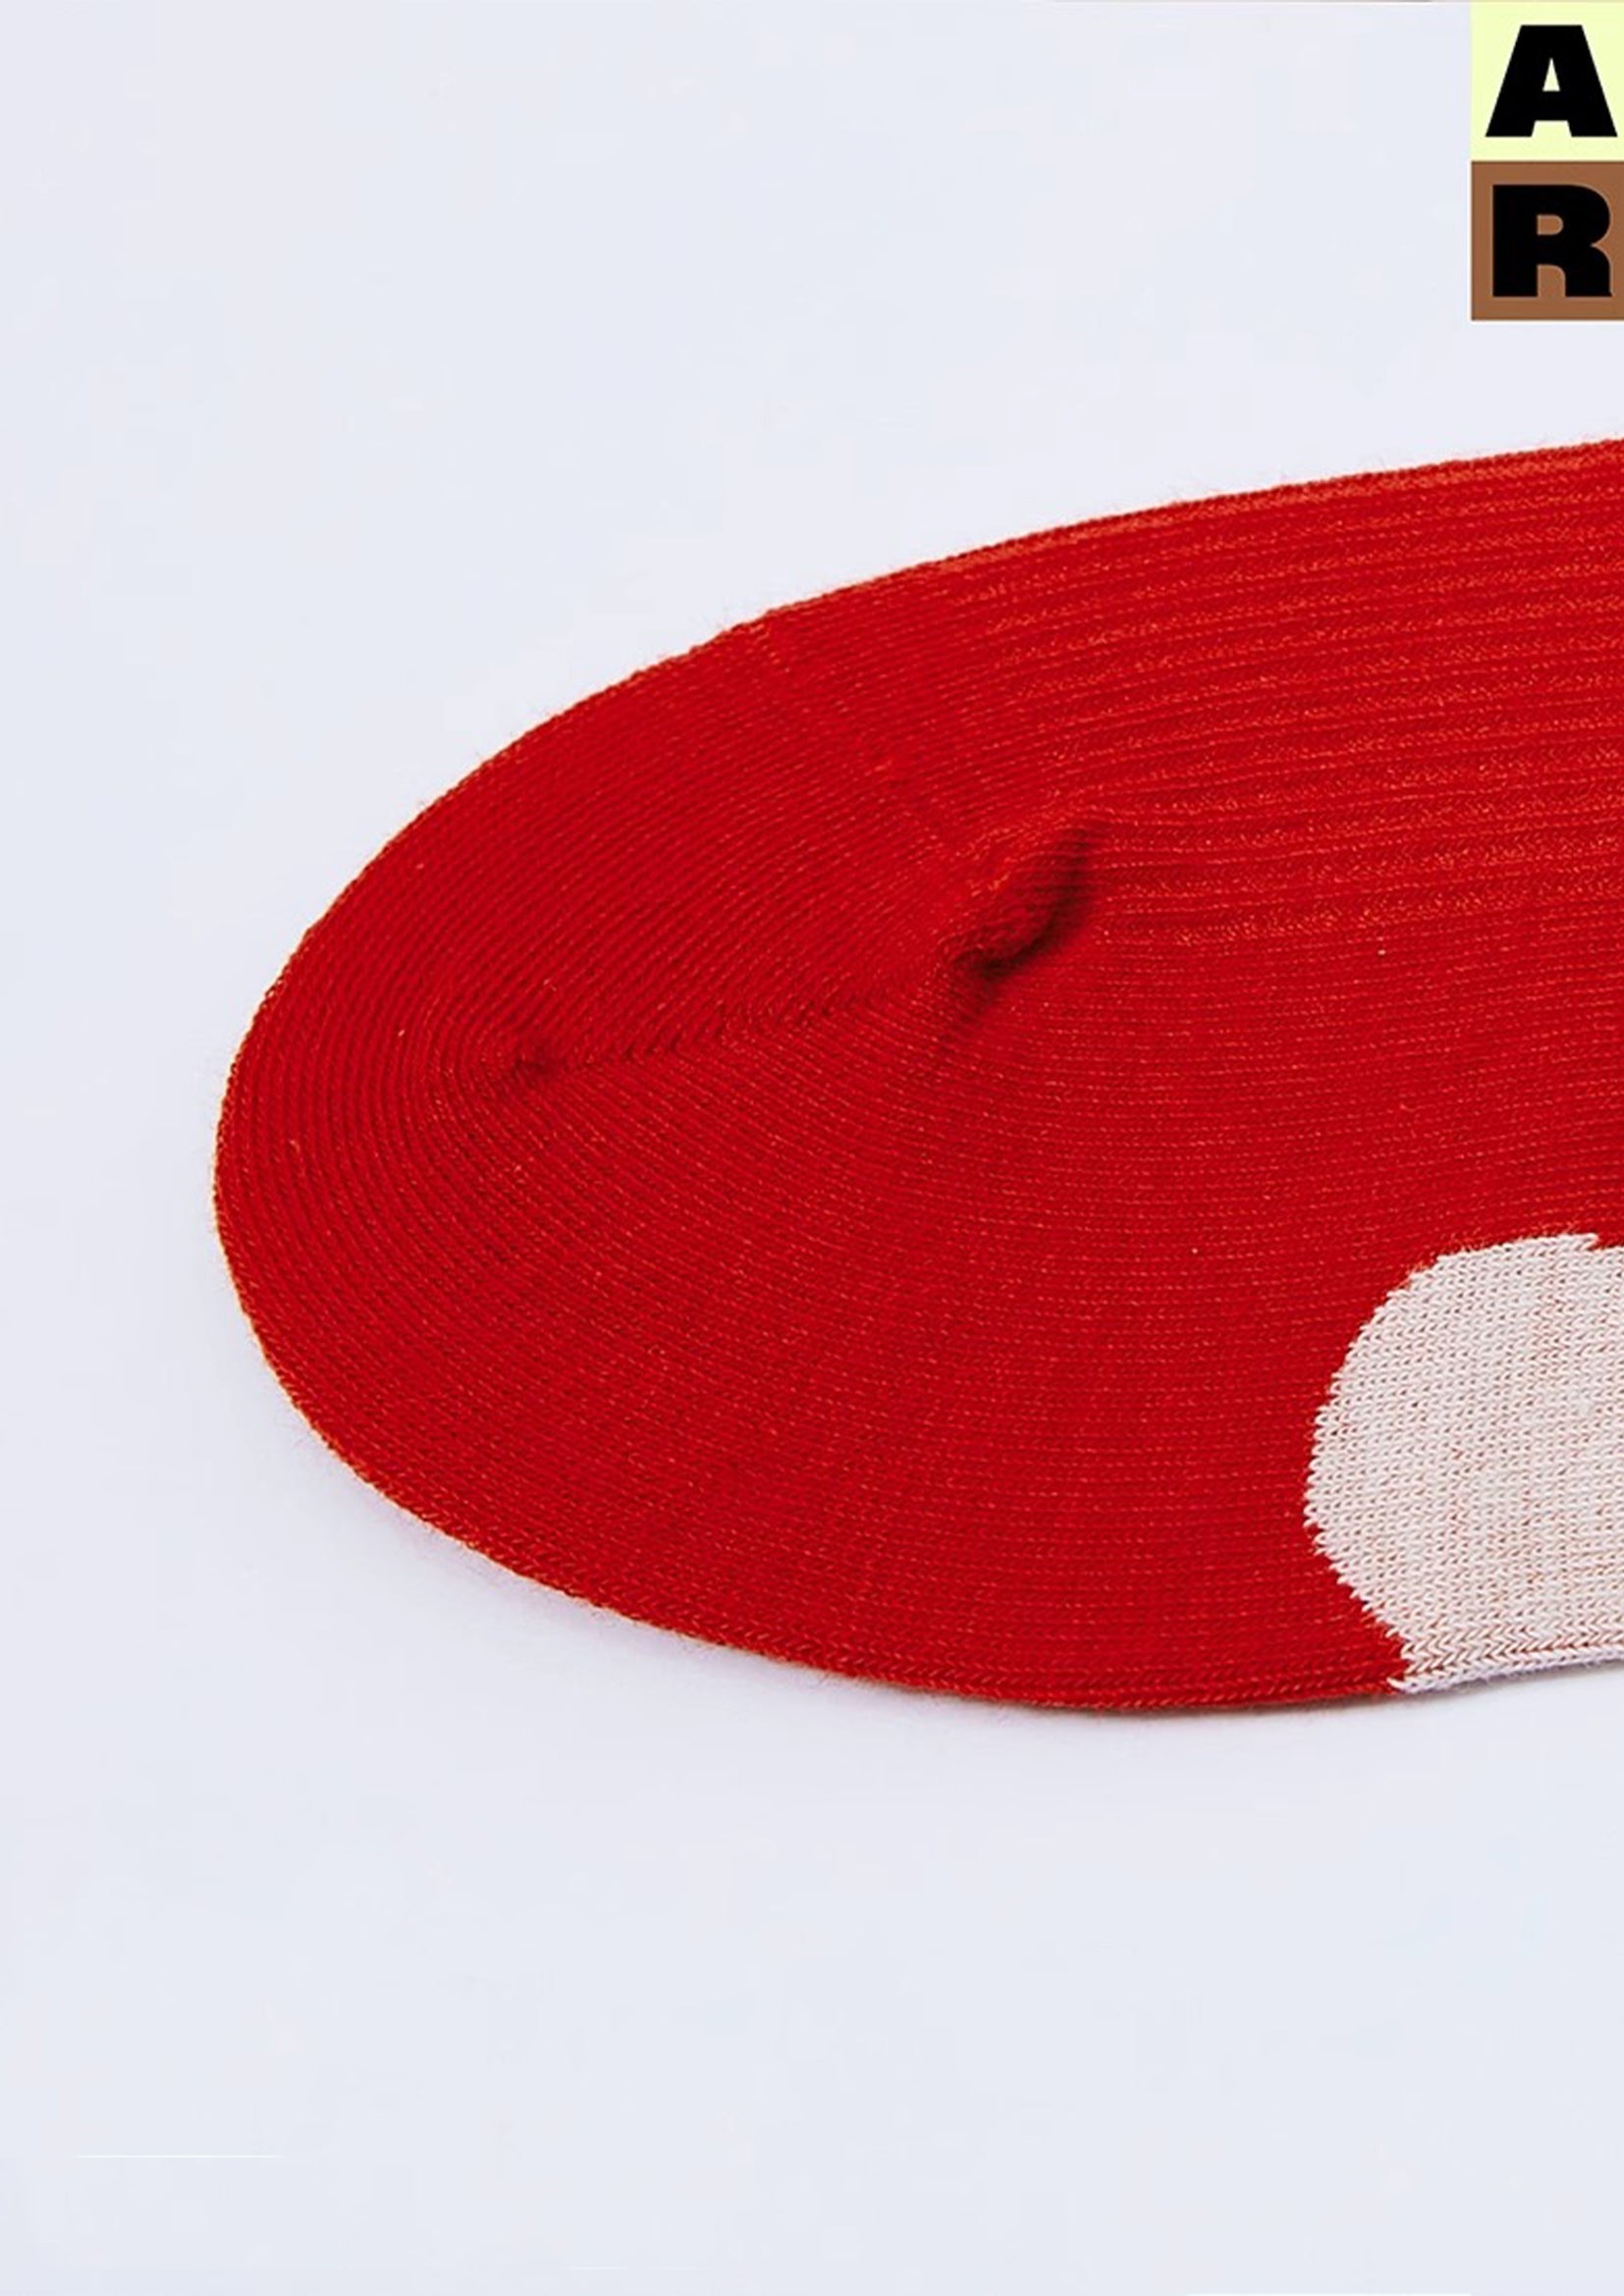 Heart mid-calf sock - red